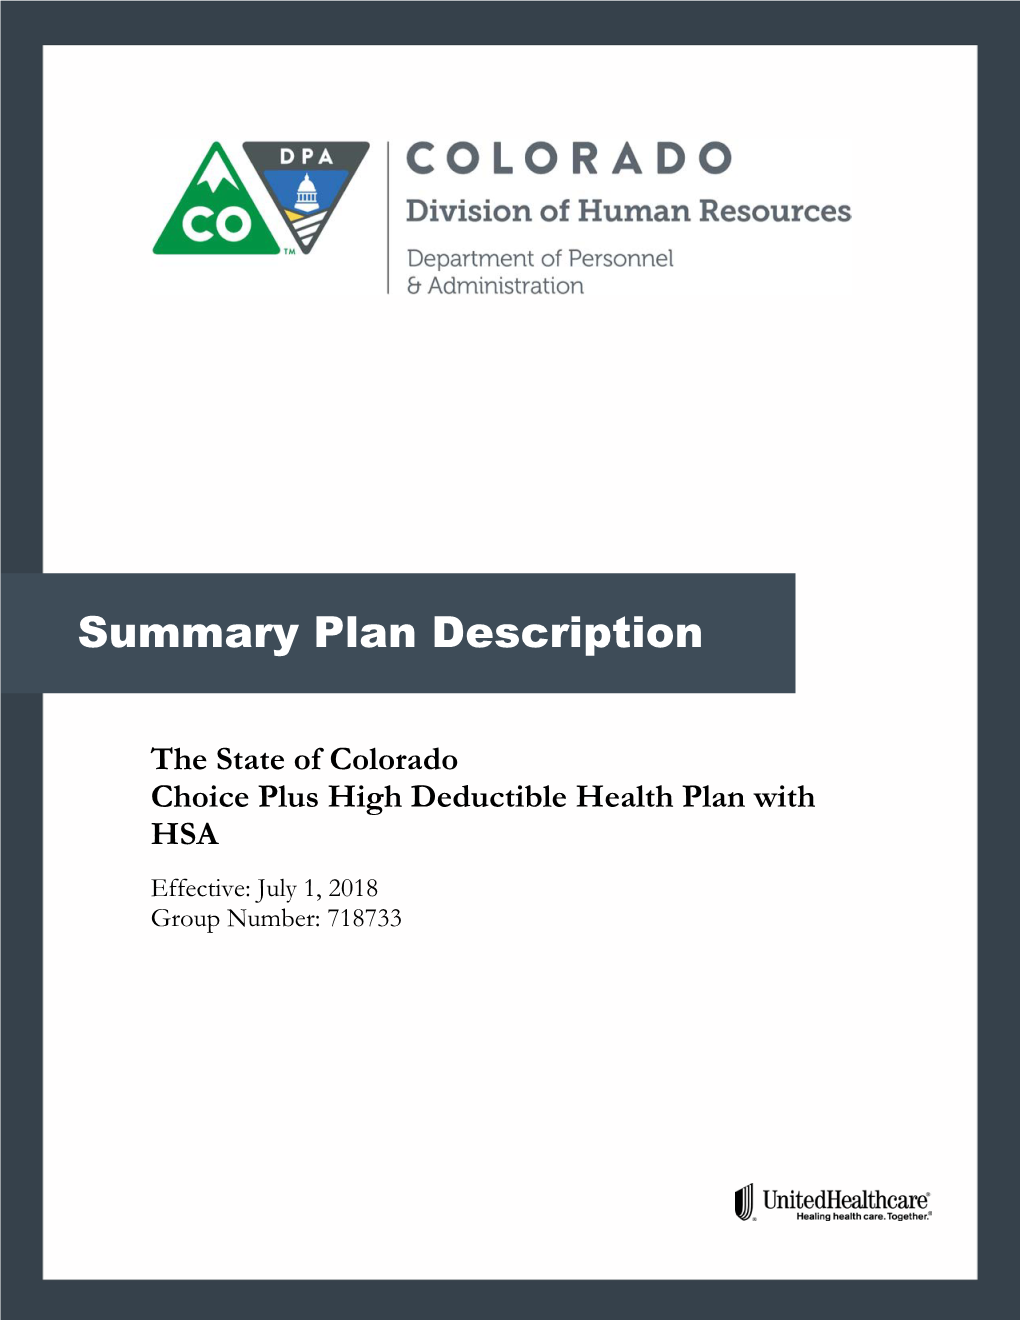 Summary Plan Description for Choice Plus High Deductible Health Plan